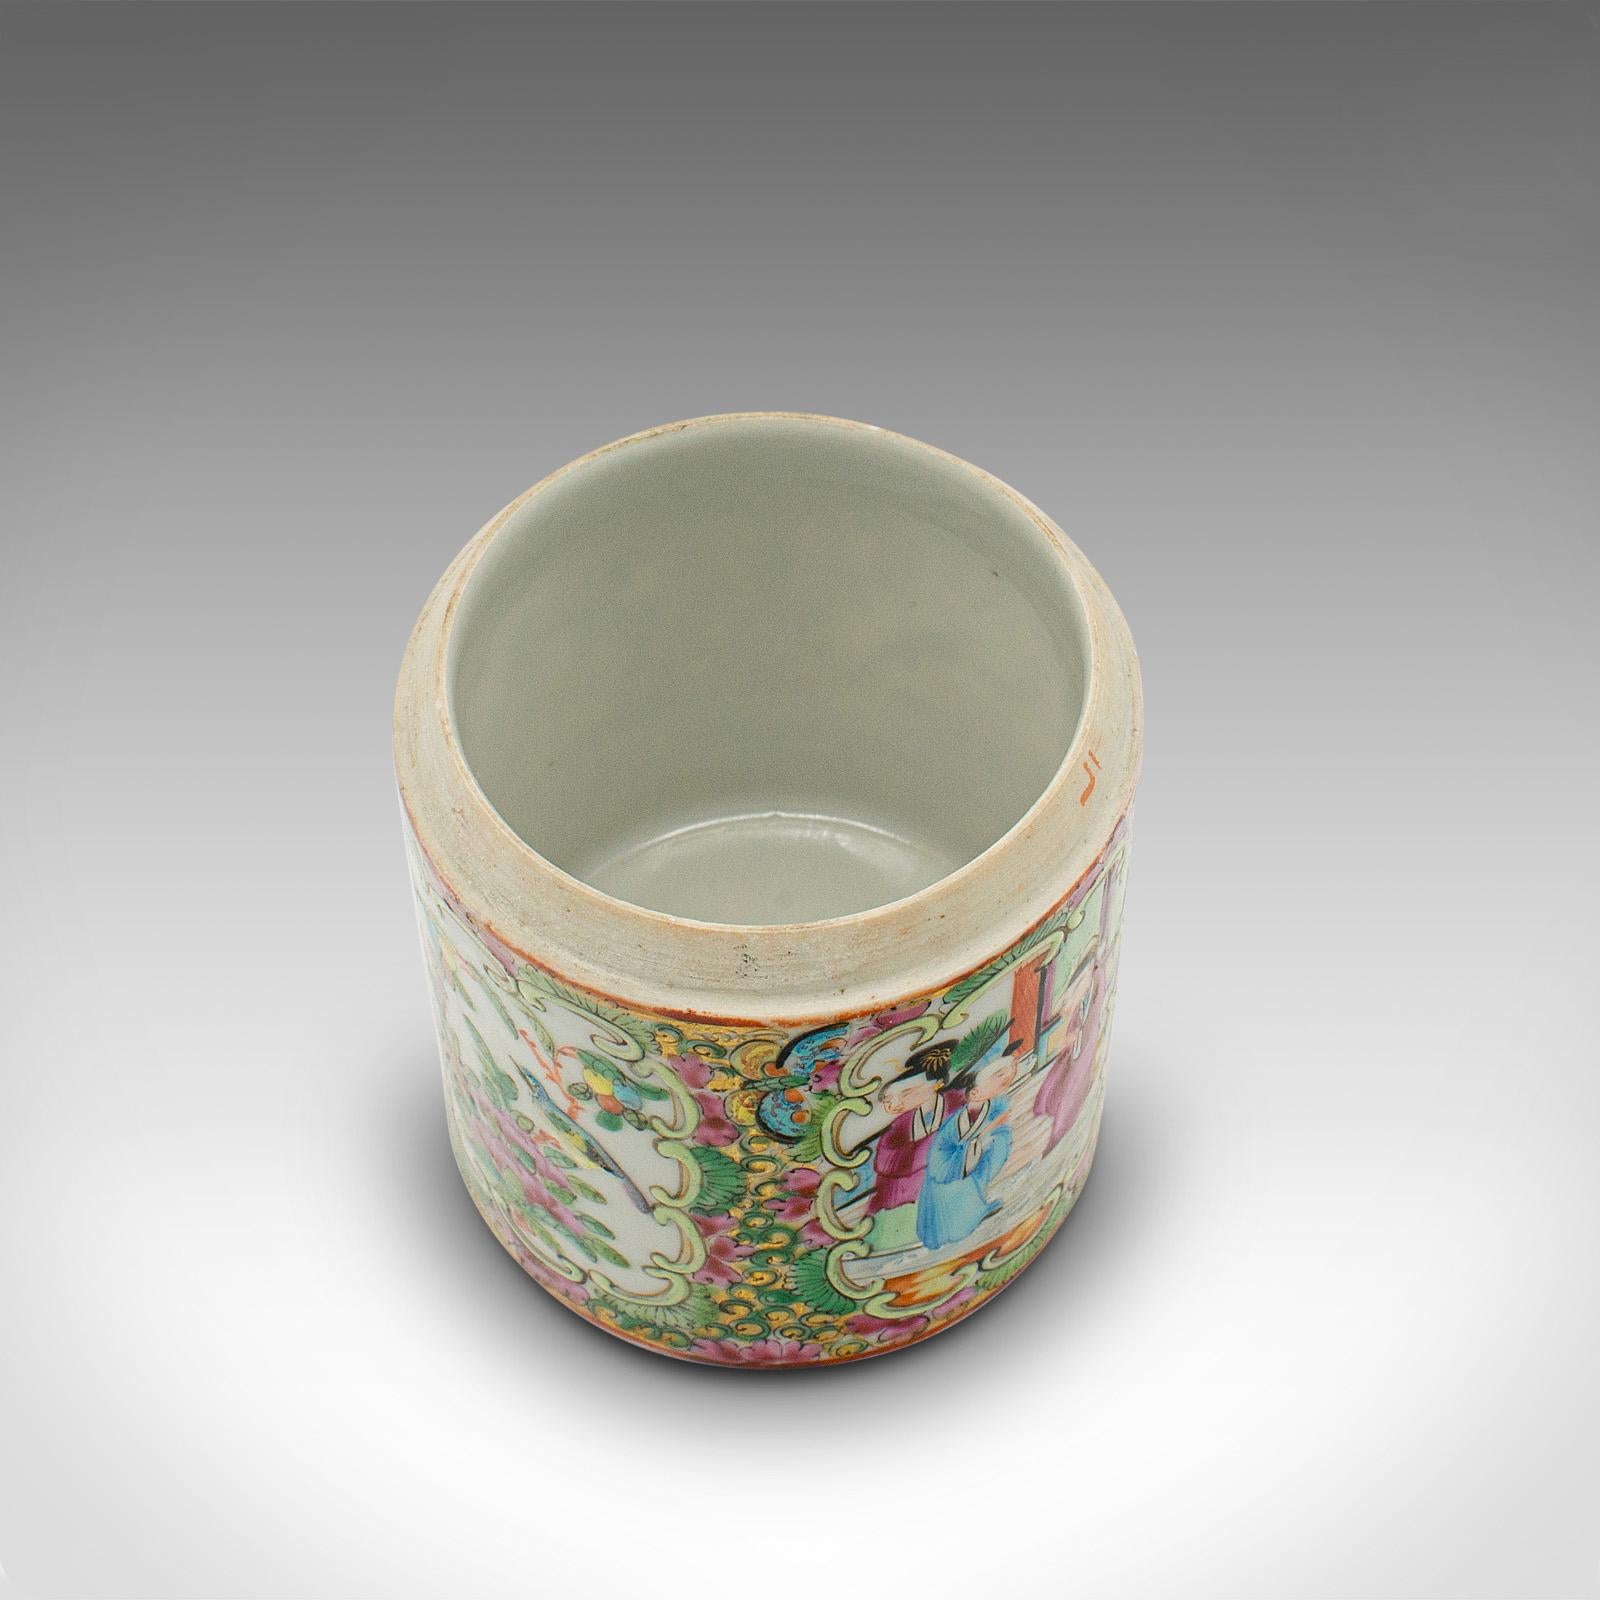 Small Antique Famille Rose Spice Jar, Chinese Ceramic, Decorative Pot, Victorian 3